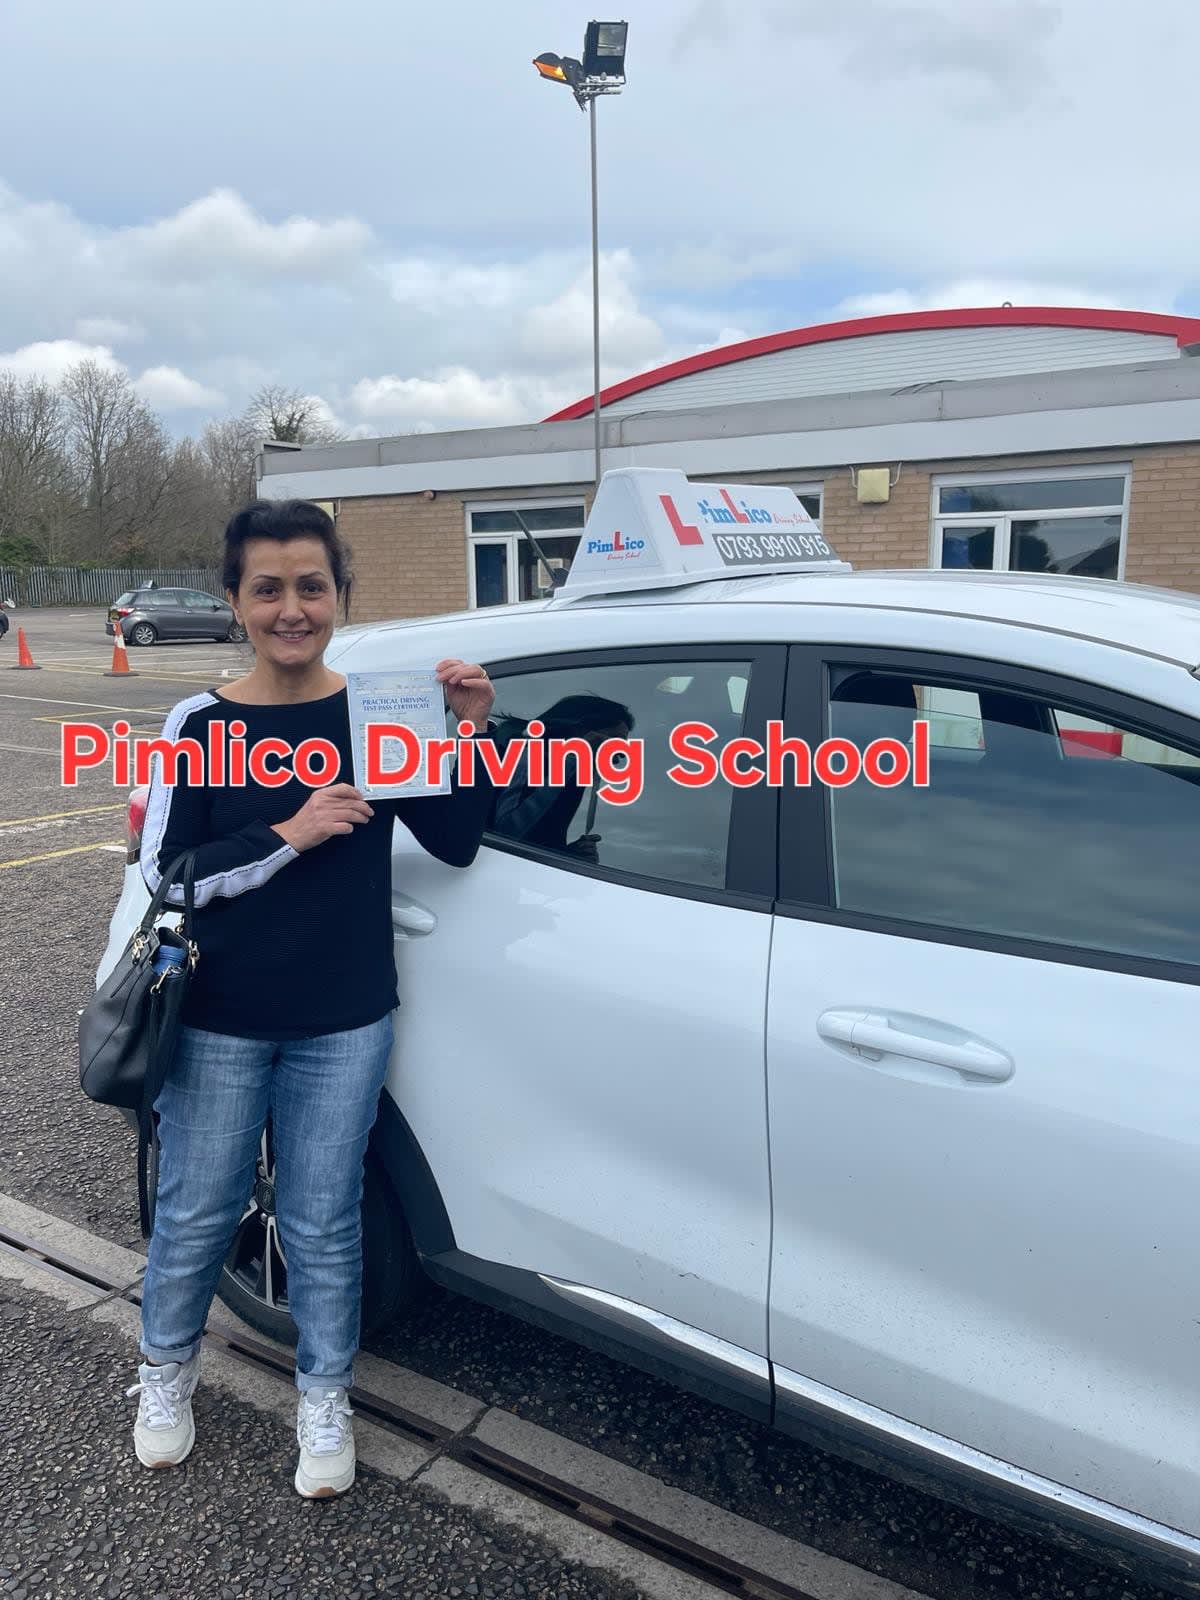 Images Pimlico Driving School